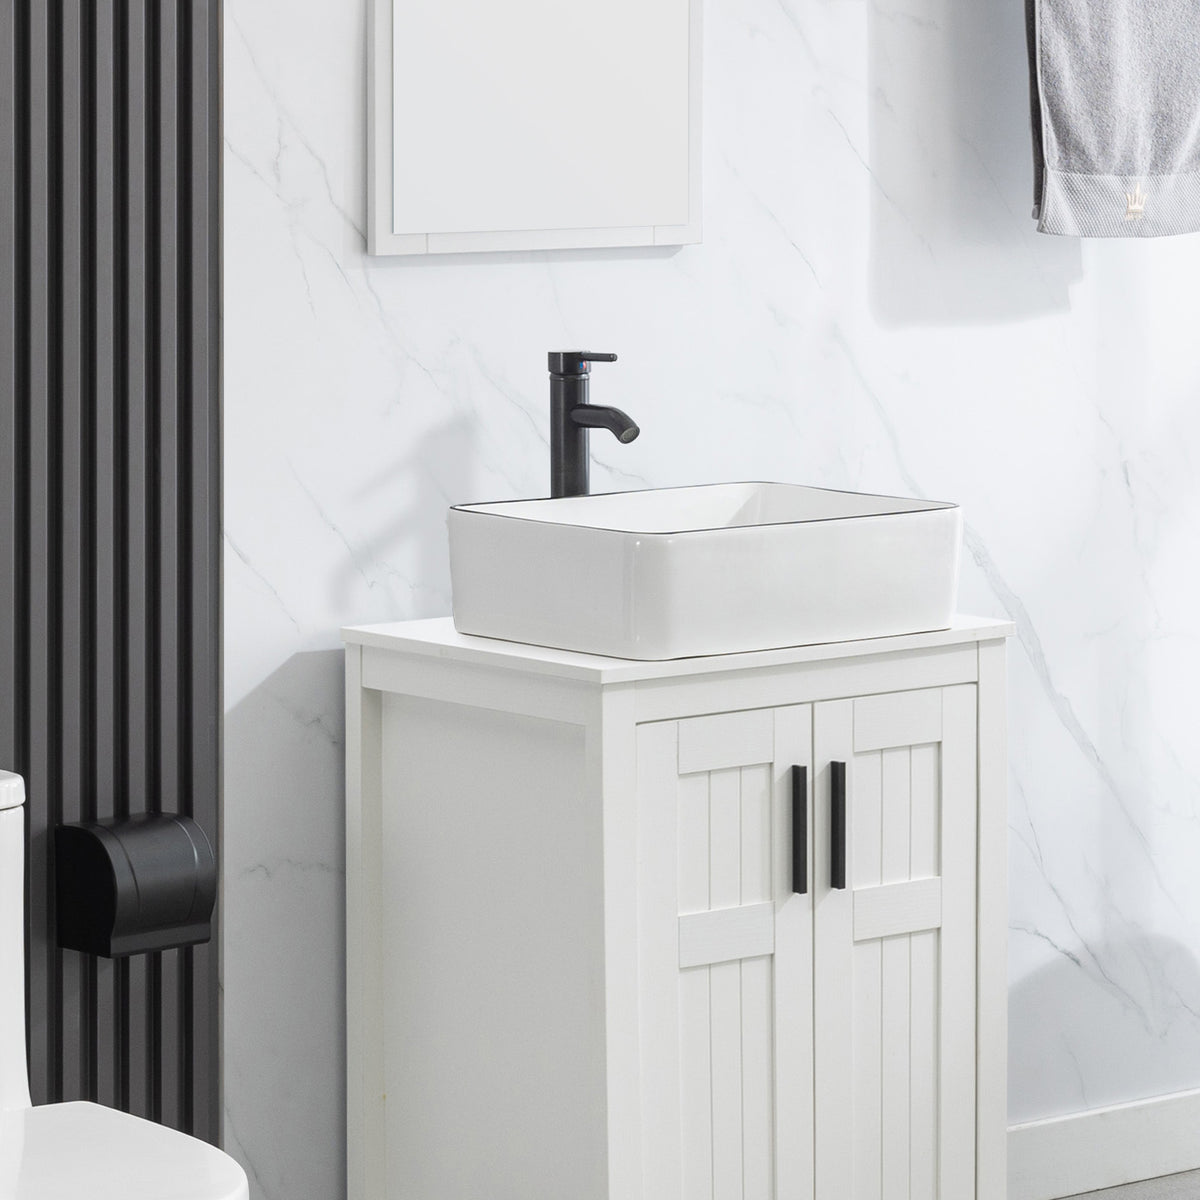 Eclife Bathroom Ceramic Sink Bowl Classic White with Black Decor Line Porcelain Vessel Sink